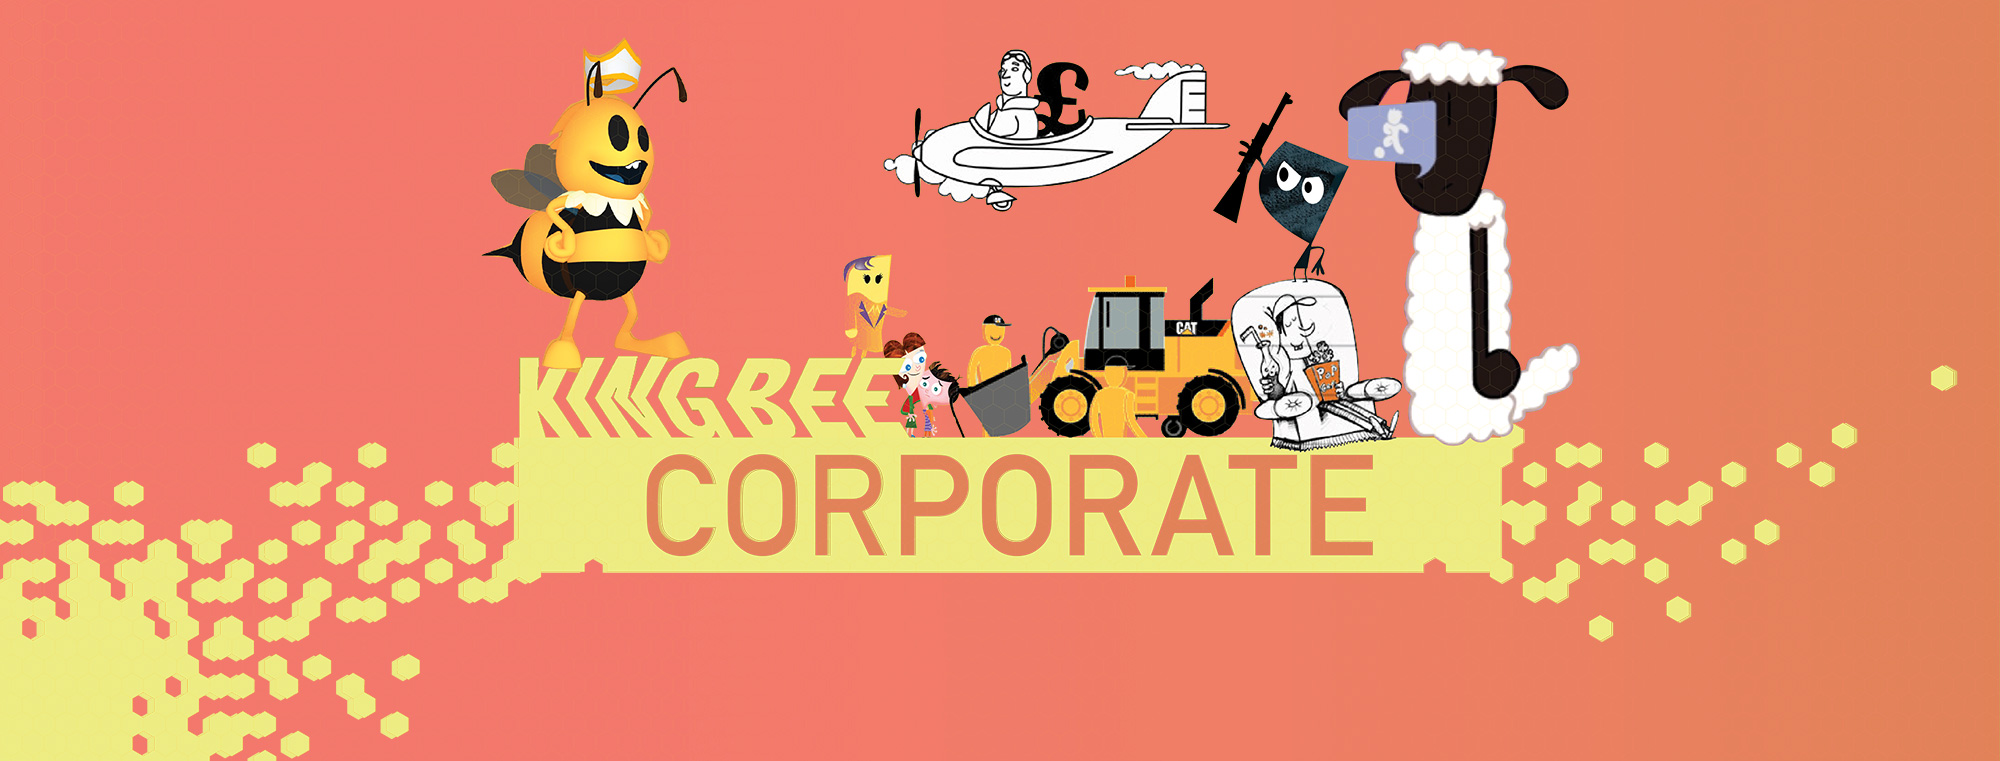 Corporate Animated Video Production Company London UK